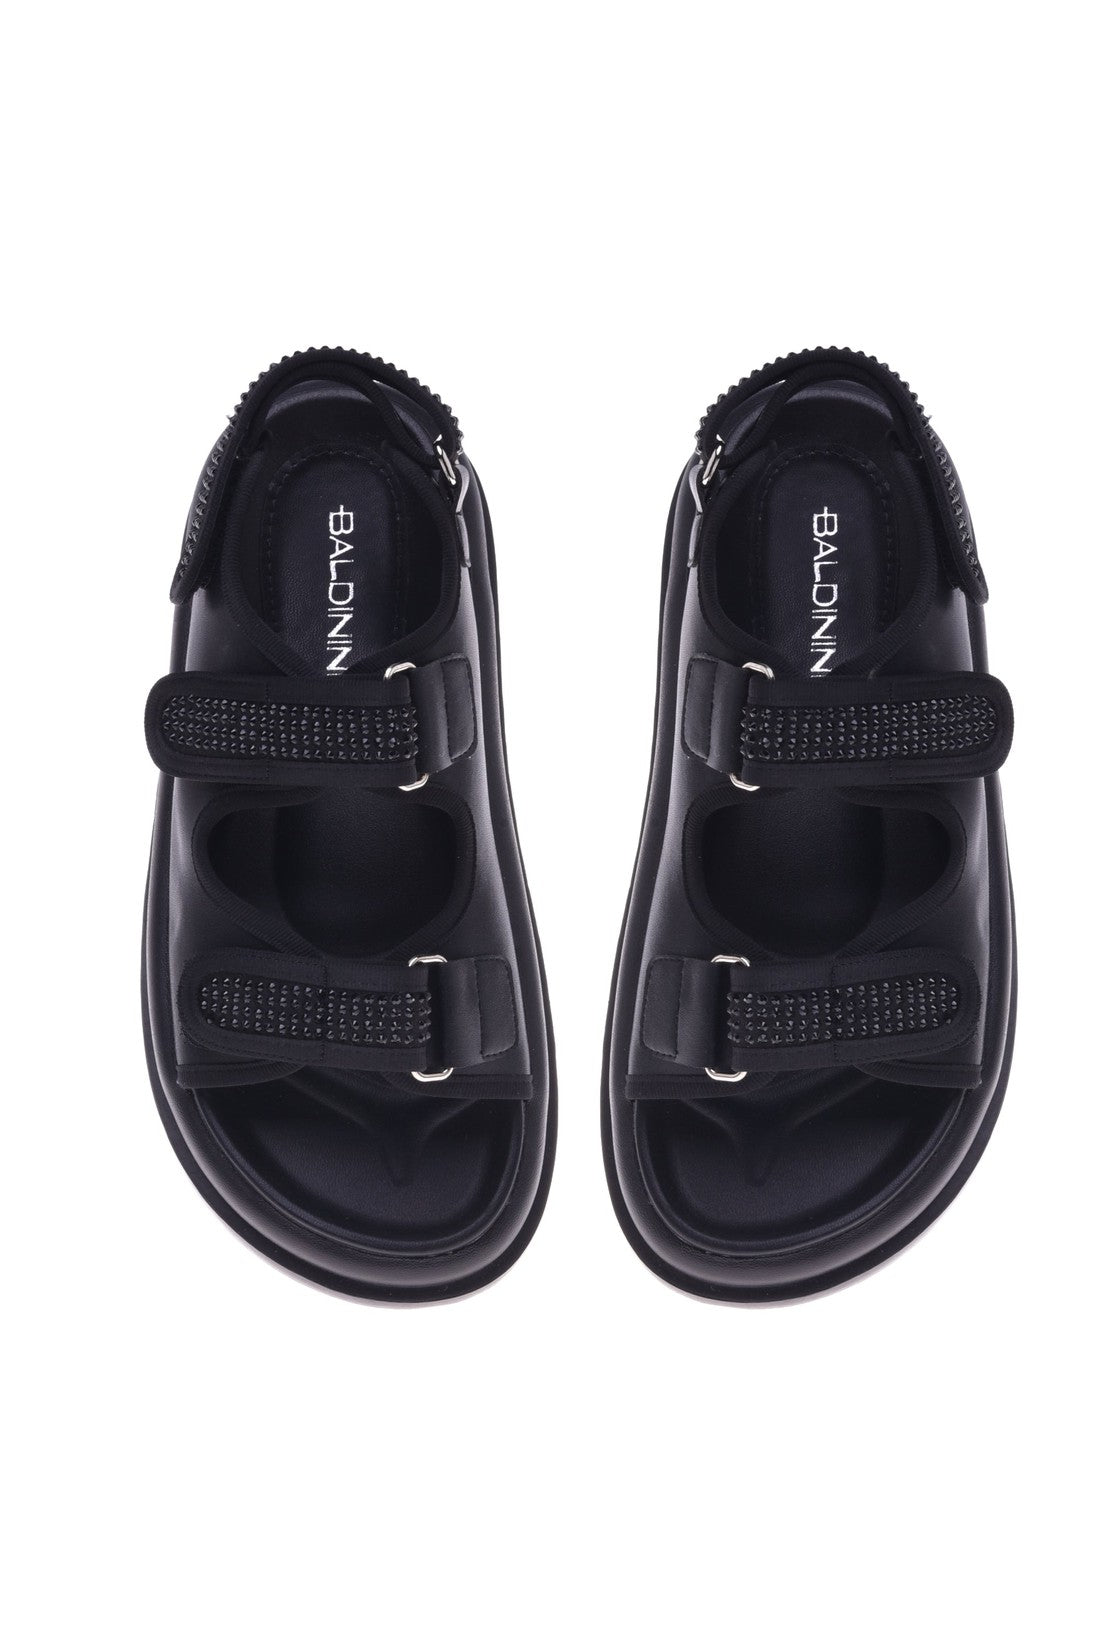 BALDININI-OUTLET-SALE-Sandal-in-black-calfskin-with-rhinestones-Sandalen-ARCHIVE-COLLECTION-2.jpg